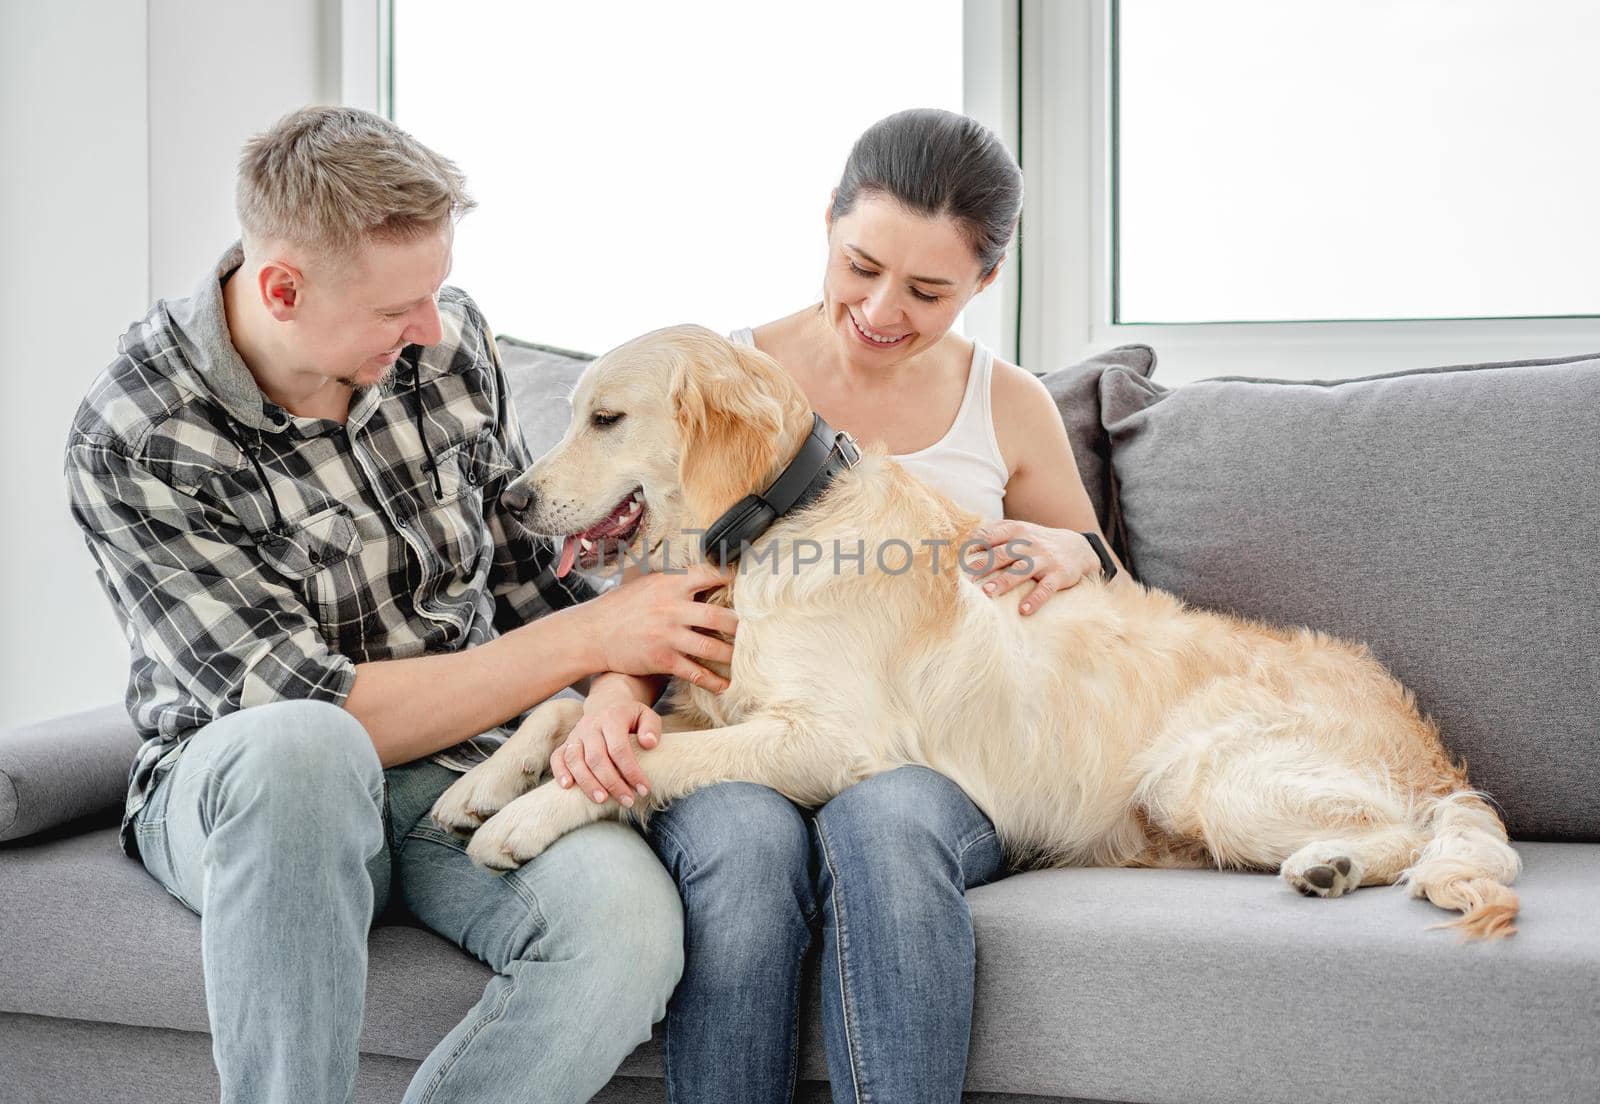 Beautiful woman and man cuddling cute dog in light room